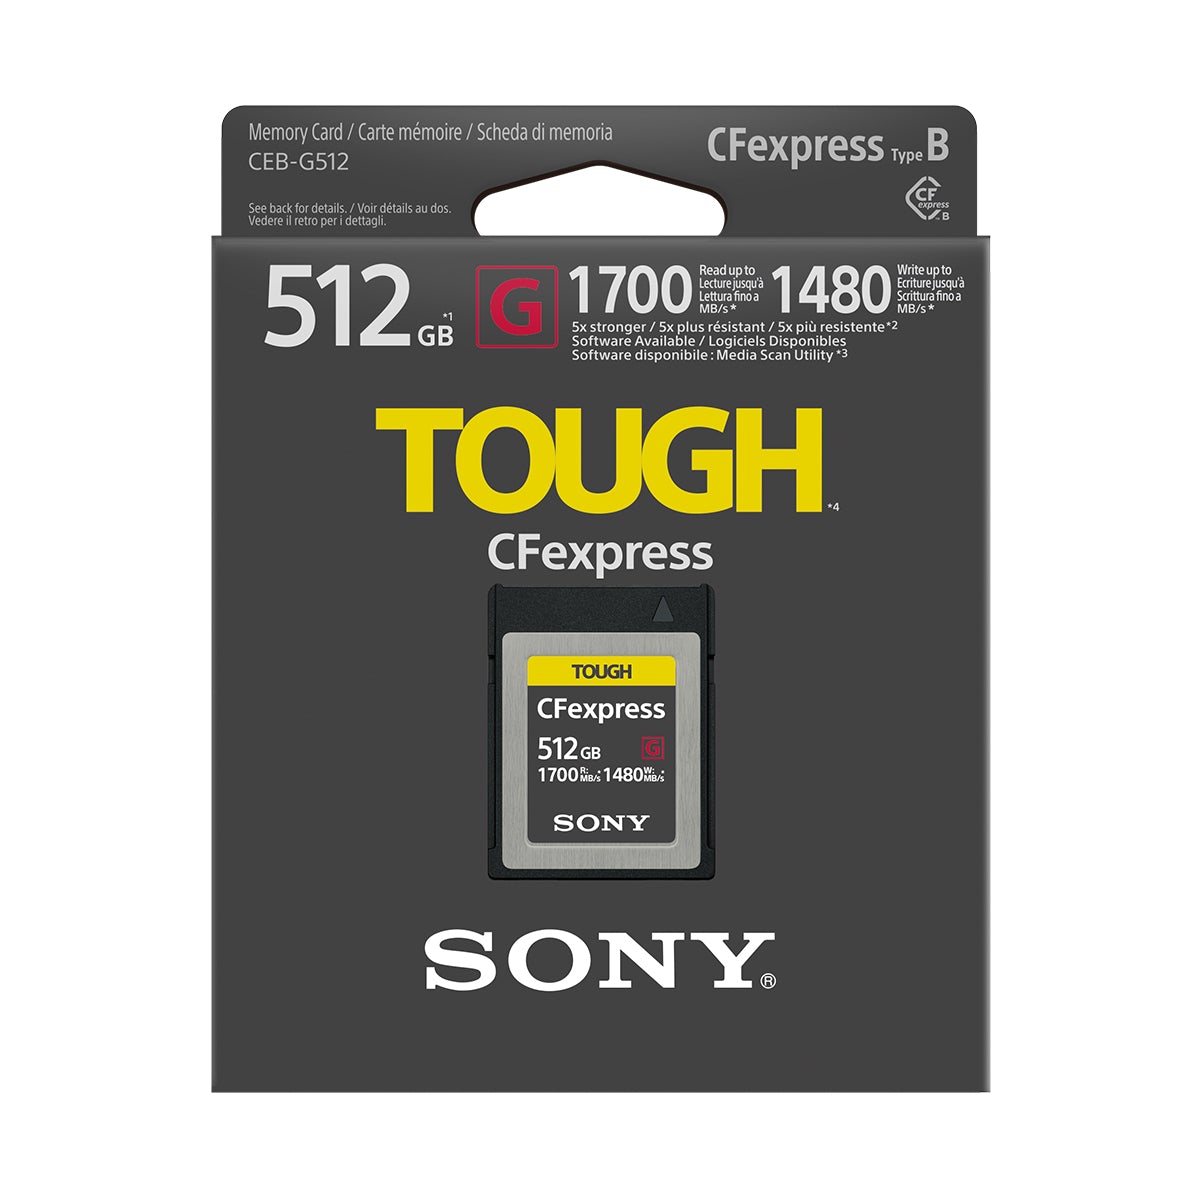 Sony TOUGH 512GB CFexpress Type B Card *OPEN BOX*